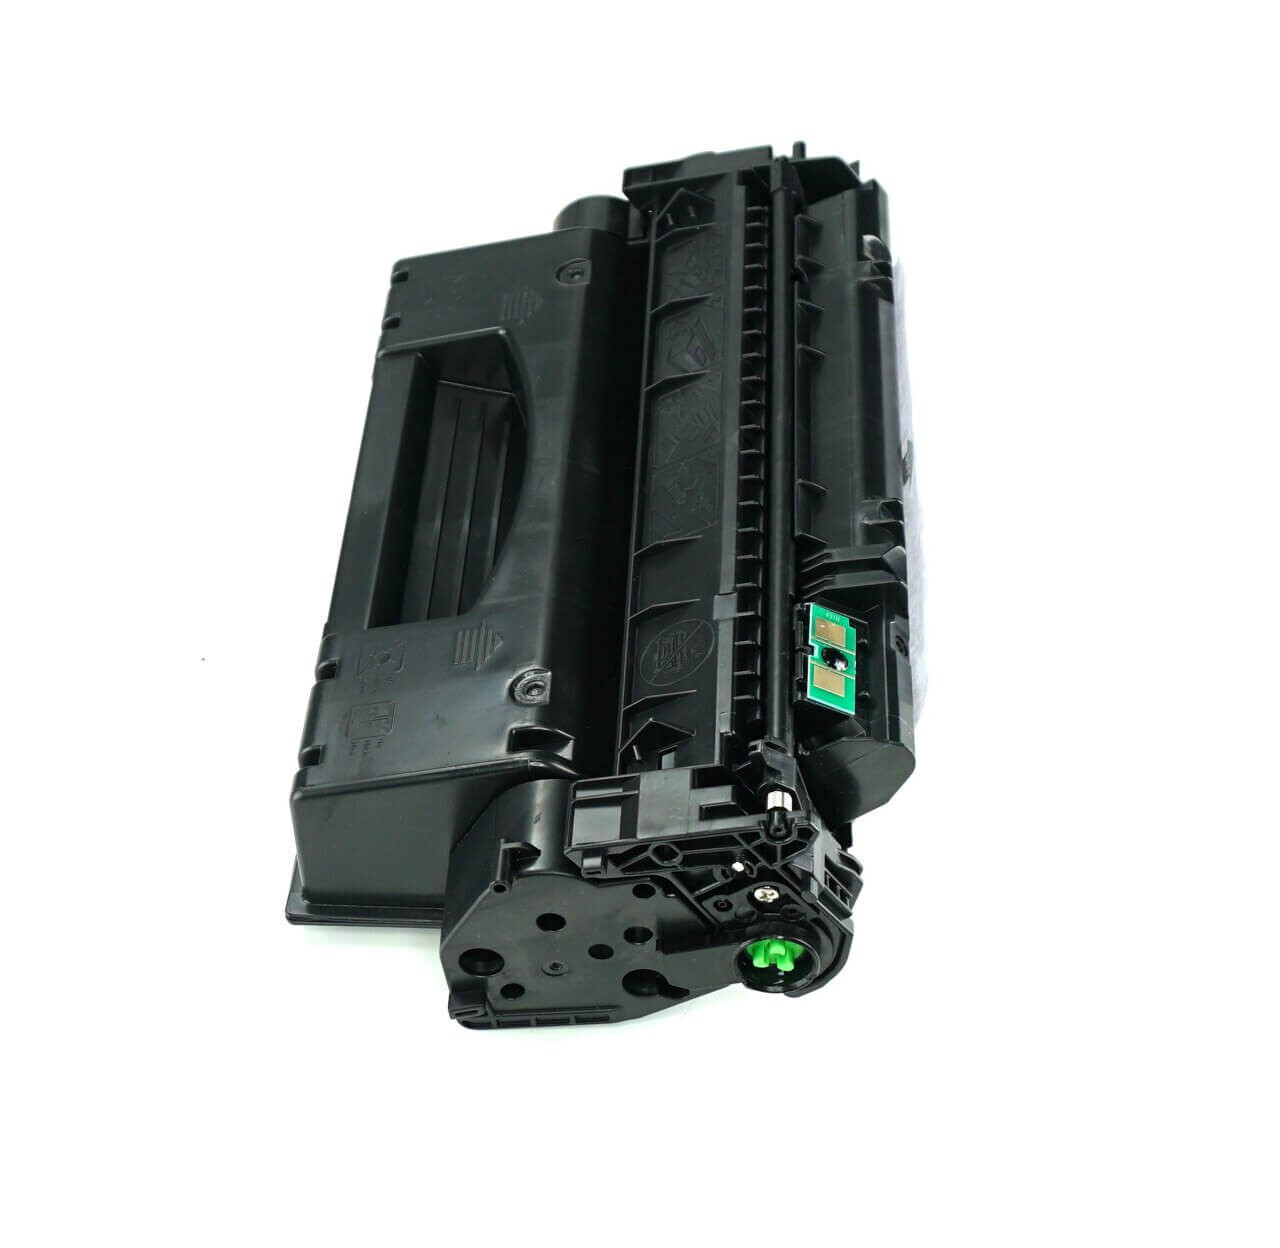 Q5949X Toner Cartridge Compatible with HP 49X LaserJet